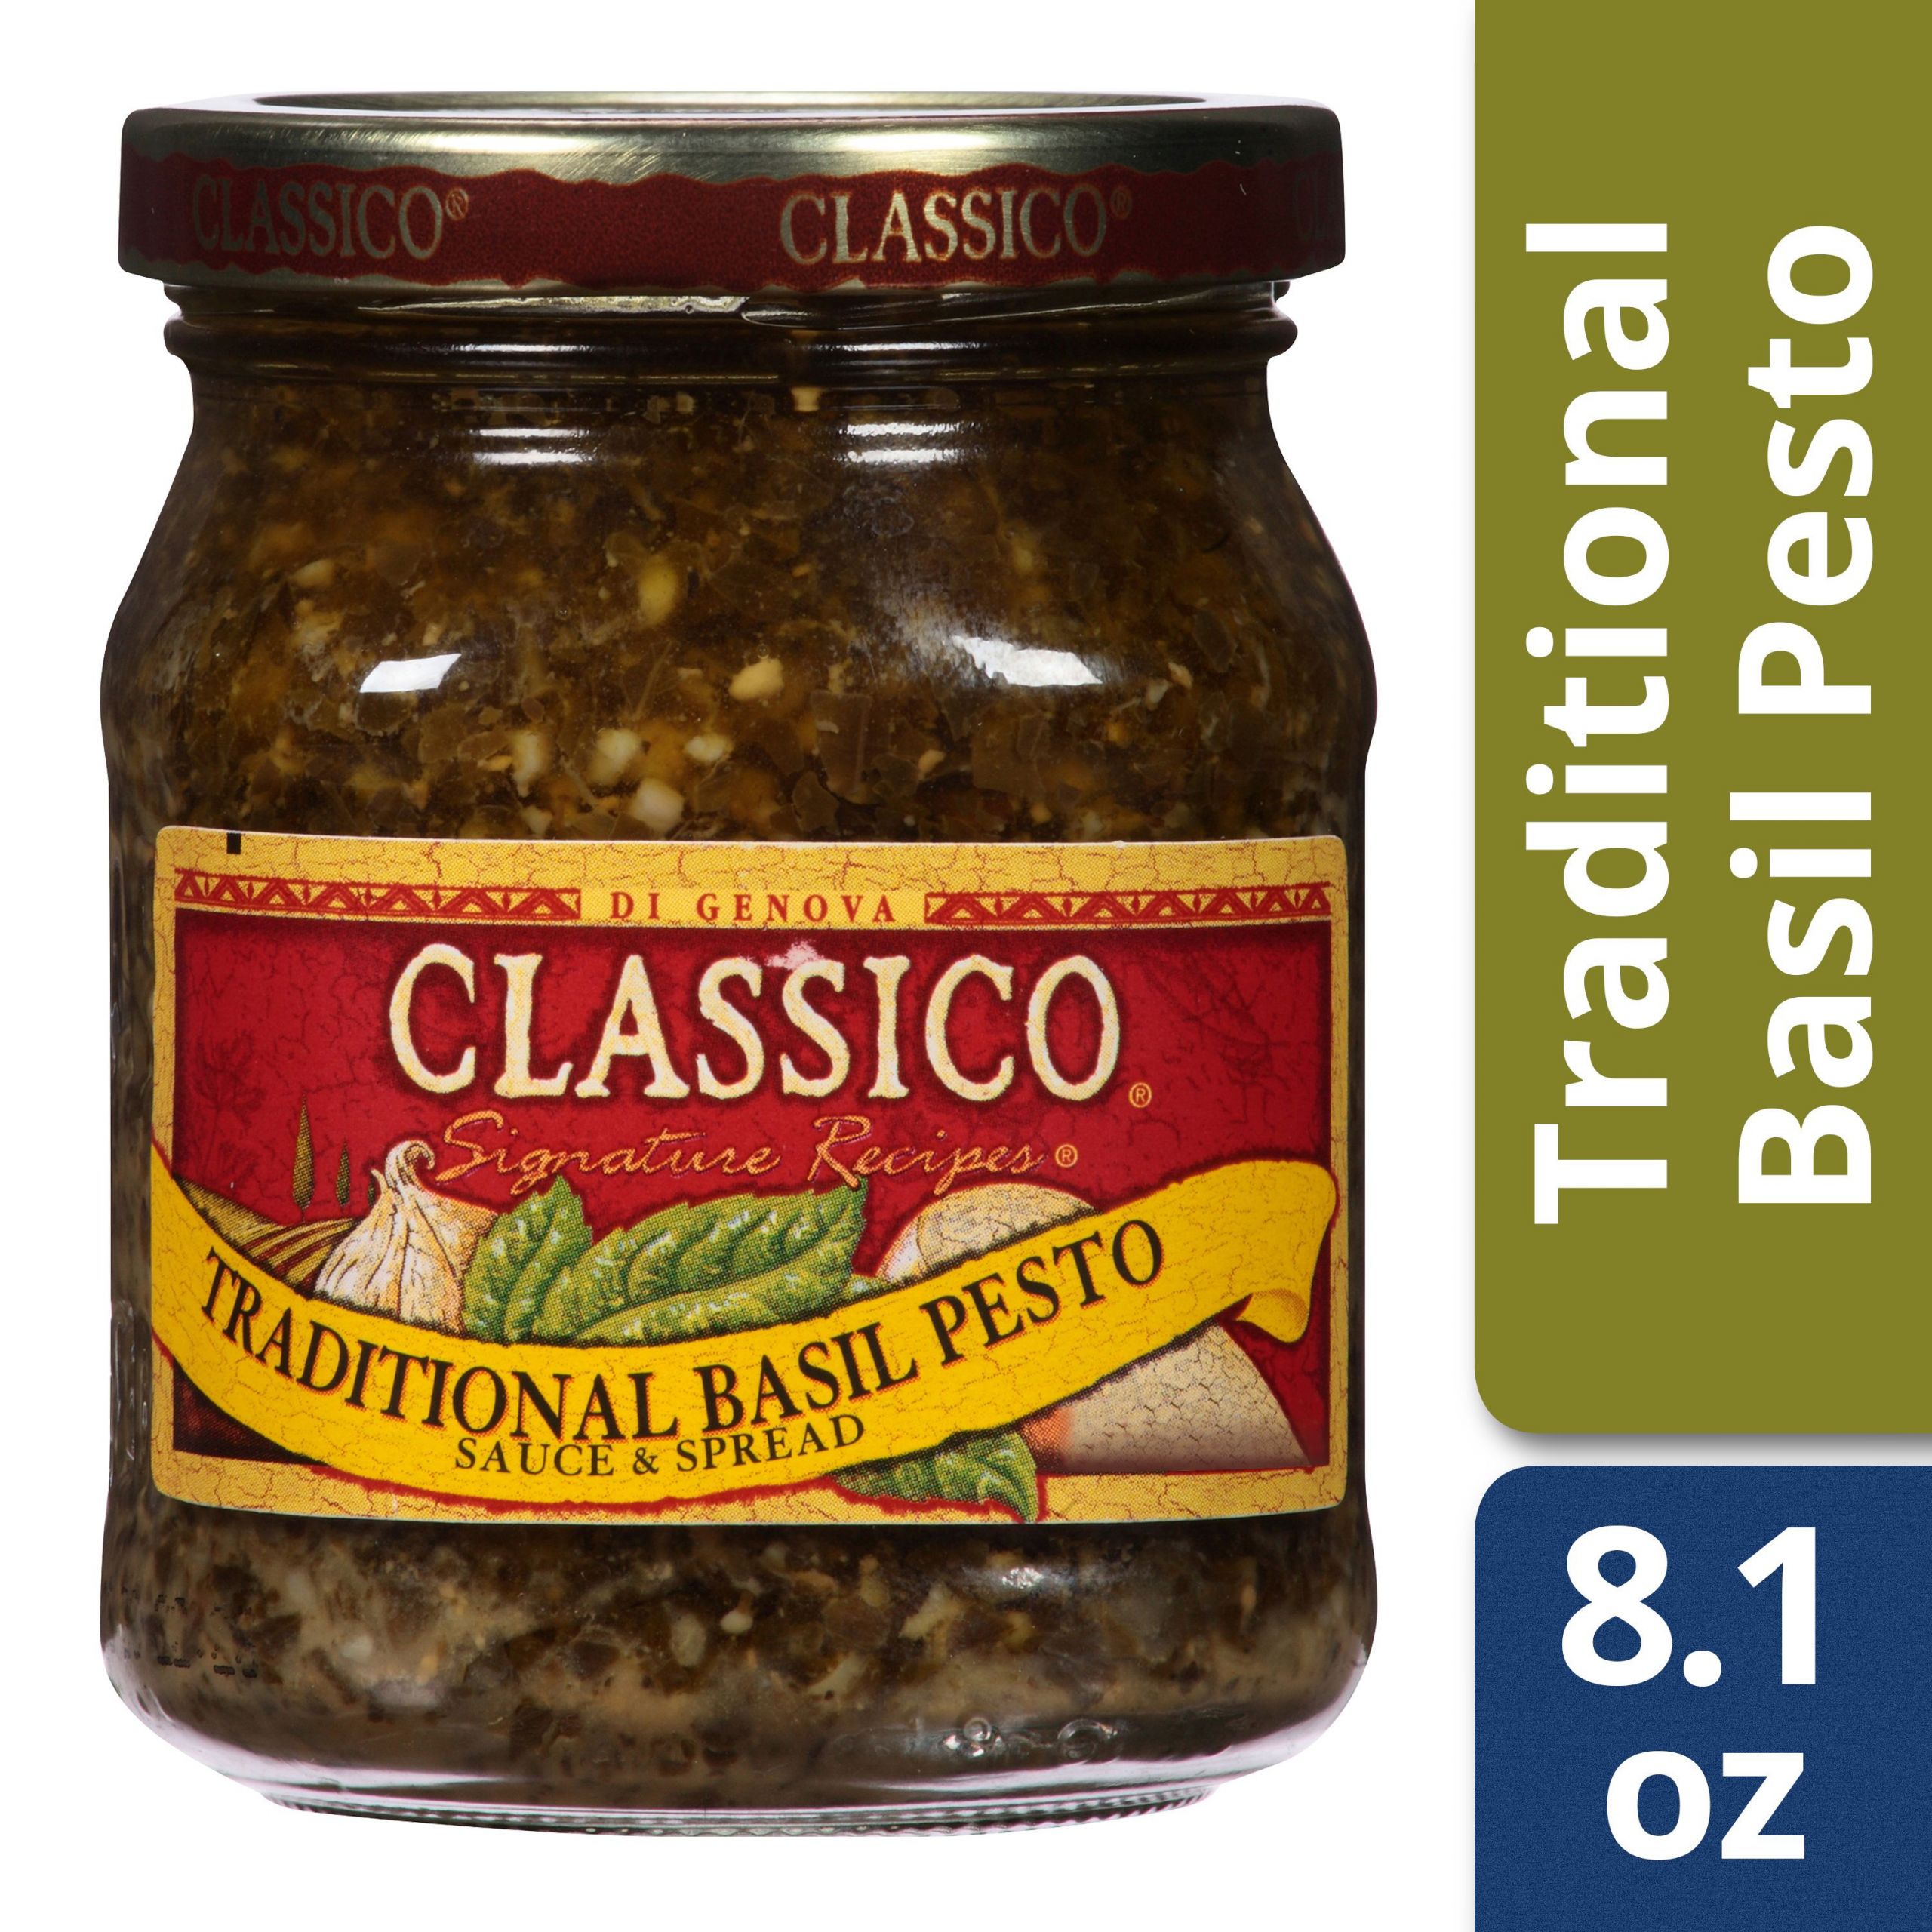 Jarred Pesto Sauce
 Classico Traditional Basil Pesto Sauce and Spread 8 1 oz